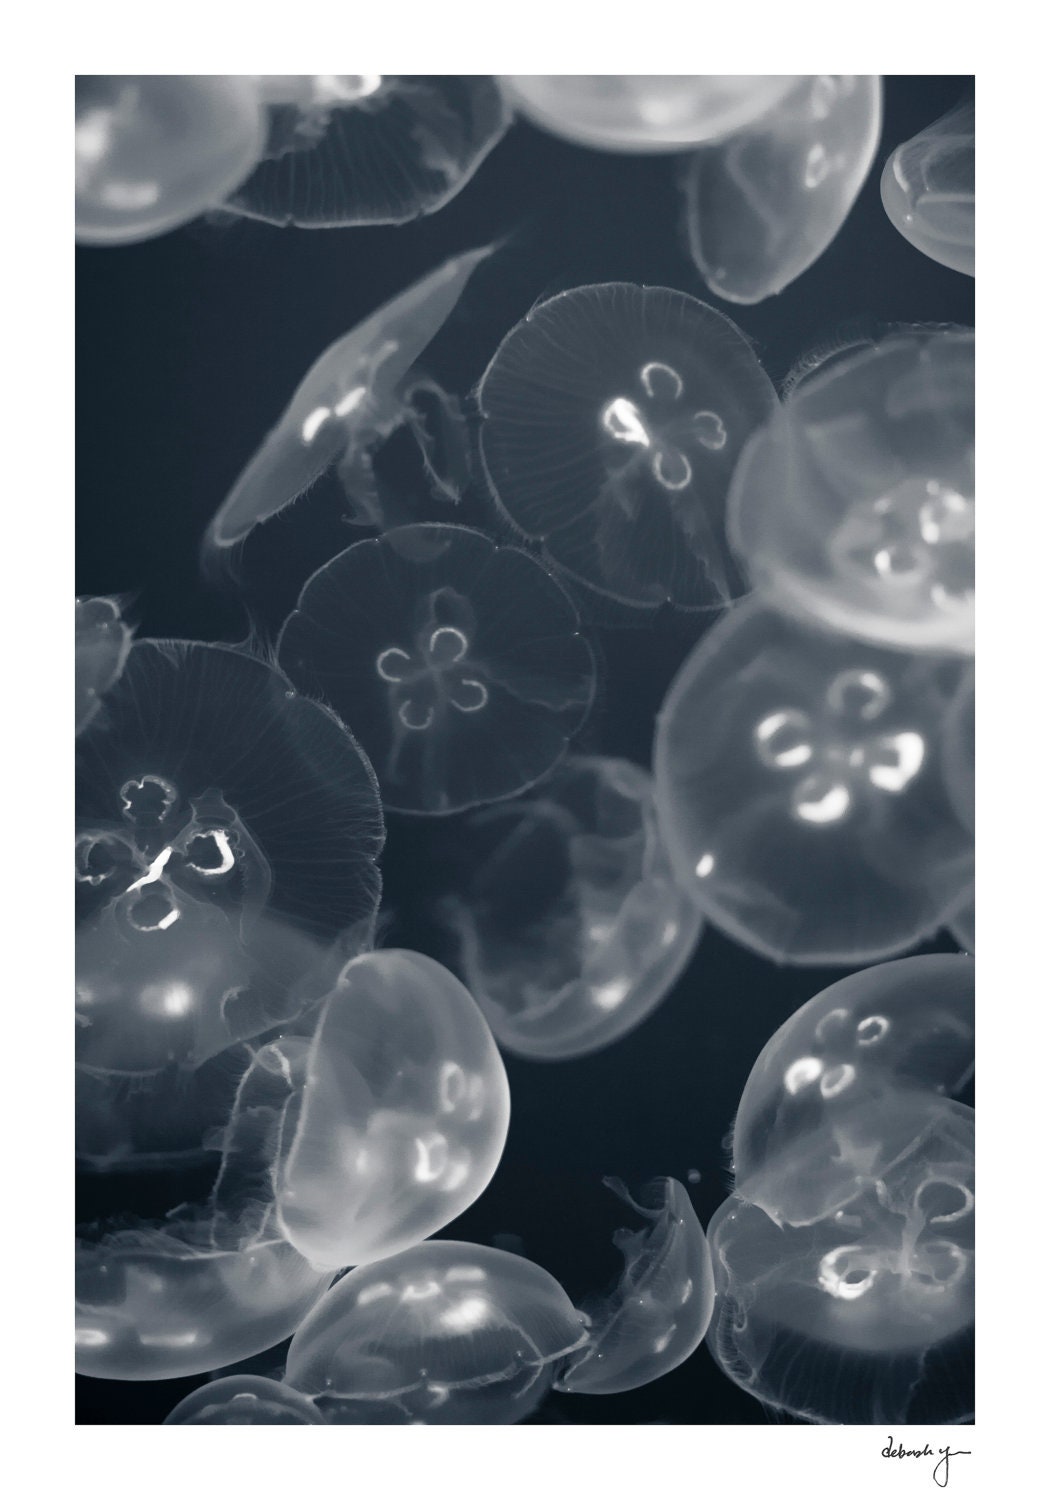 Jellyfish Photo - Blue, White Jellies, Sea life, Jelly, Fish, Seaside Decor, Buy One Get One Free, Underwater Art, Luminous Embrace - YoungSwanDesigns